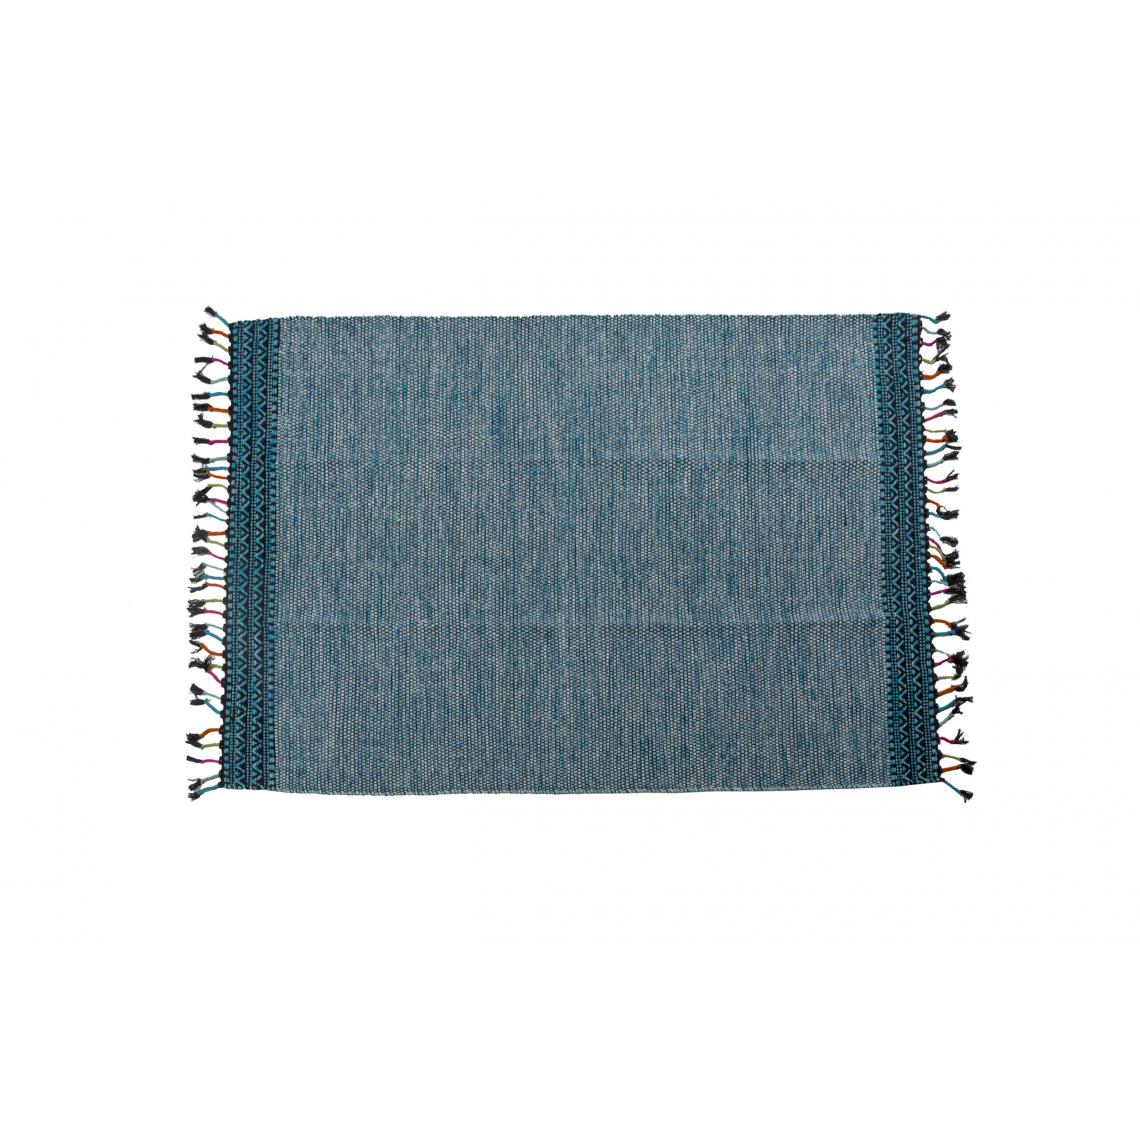 Alter - Tapis moderne Dallas, style kilim, 100% coton, bleu, 110x60cm - Tapis